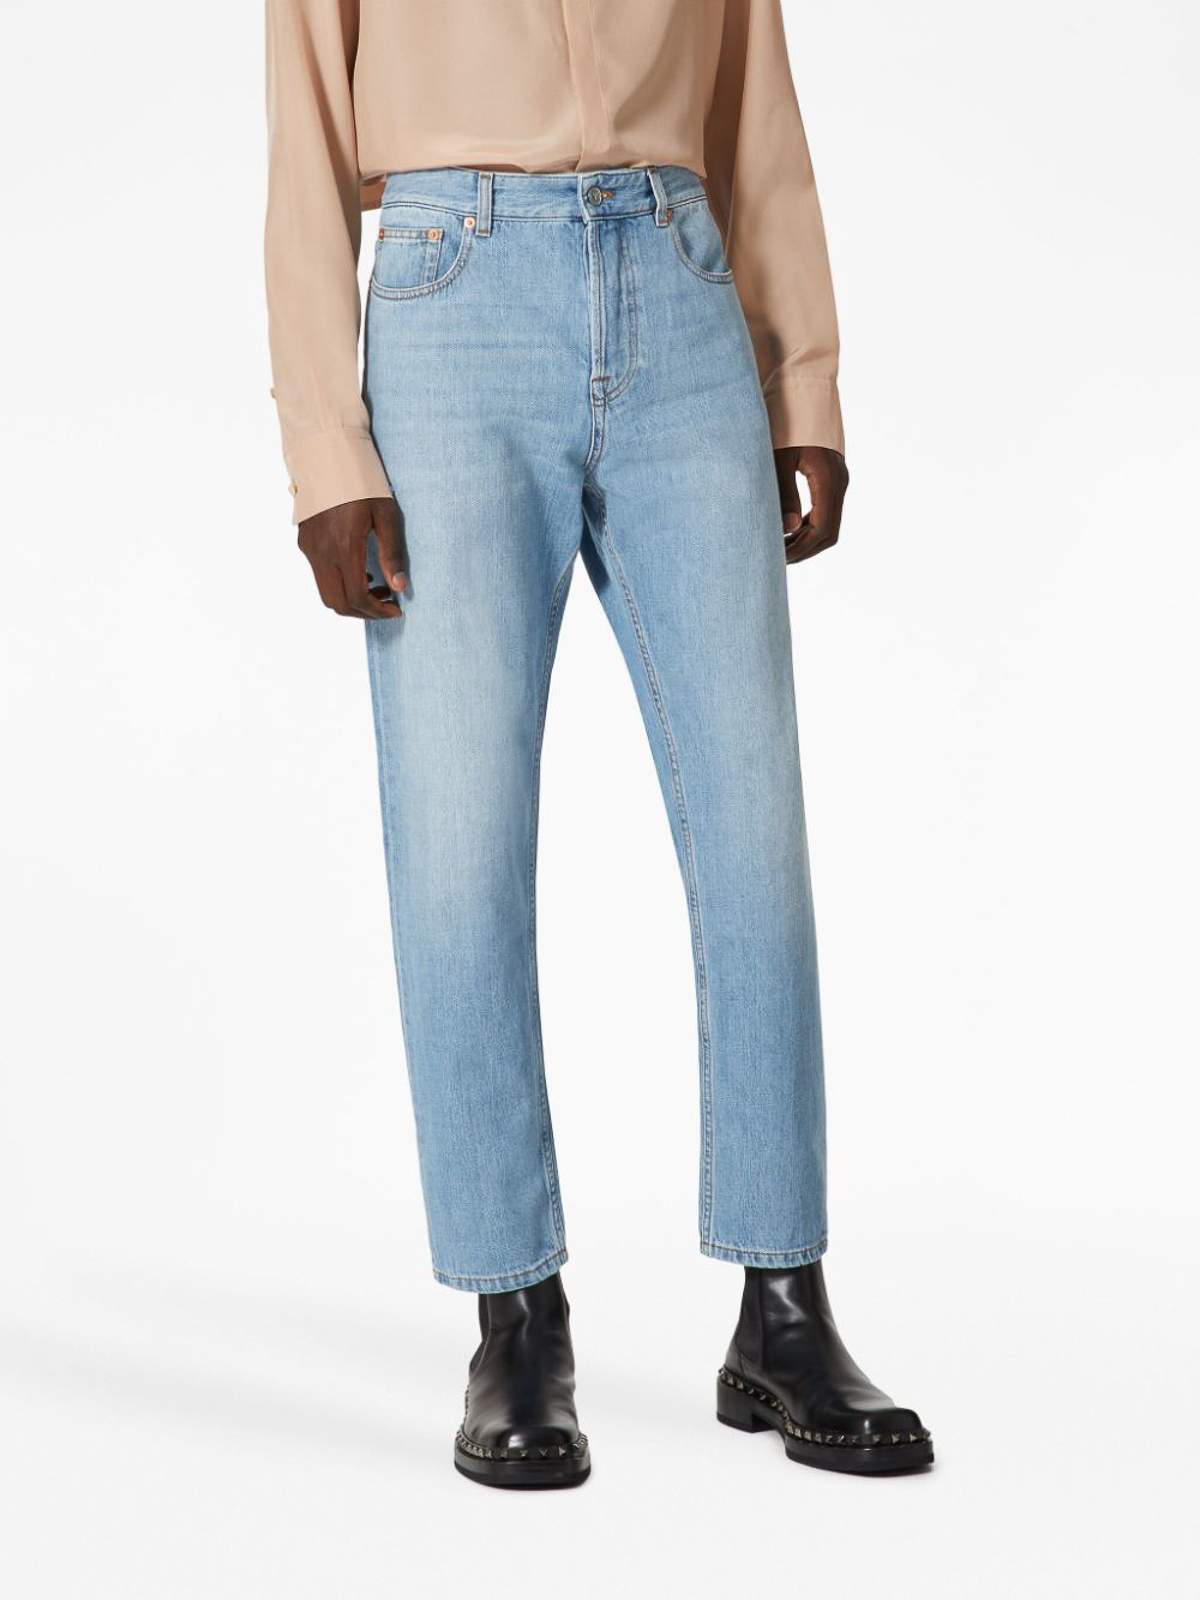 Sonoma Jeans Men's 40/34 Relaxed Fit Straight Dark Wash Denim Pants | eBay